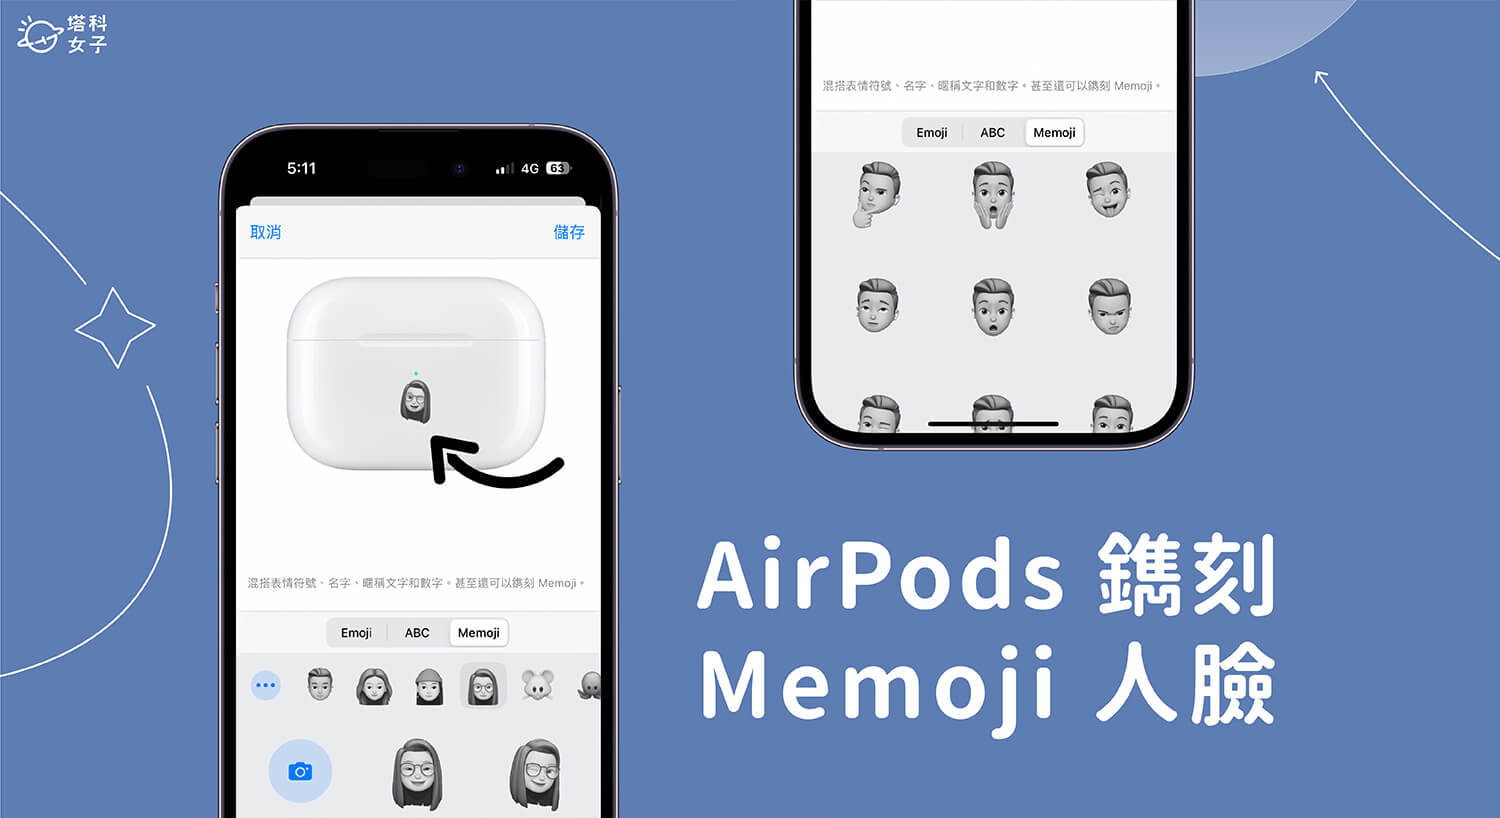 AirPods 鐫刻 Memoji 人臉圖案教學，將你的臉刻印在 AirPods 充電盒上！